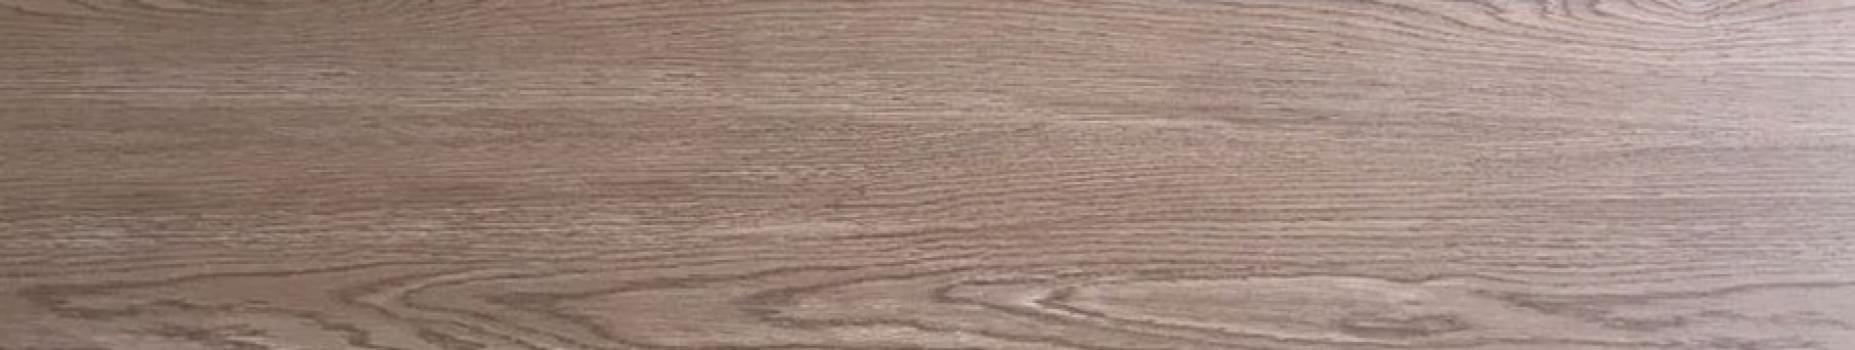 Wood Tiles CHWD07202 200x1000mm #tiles #brown